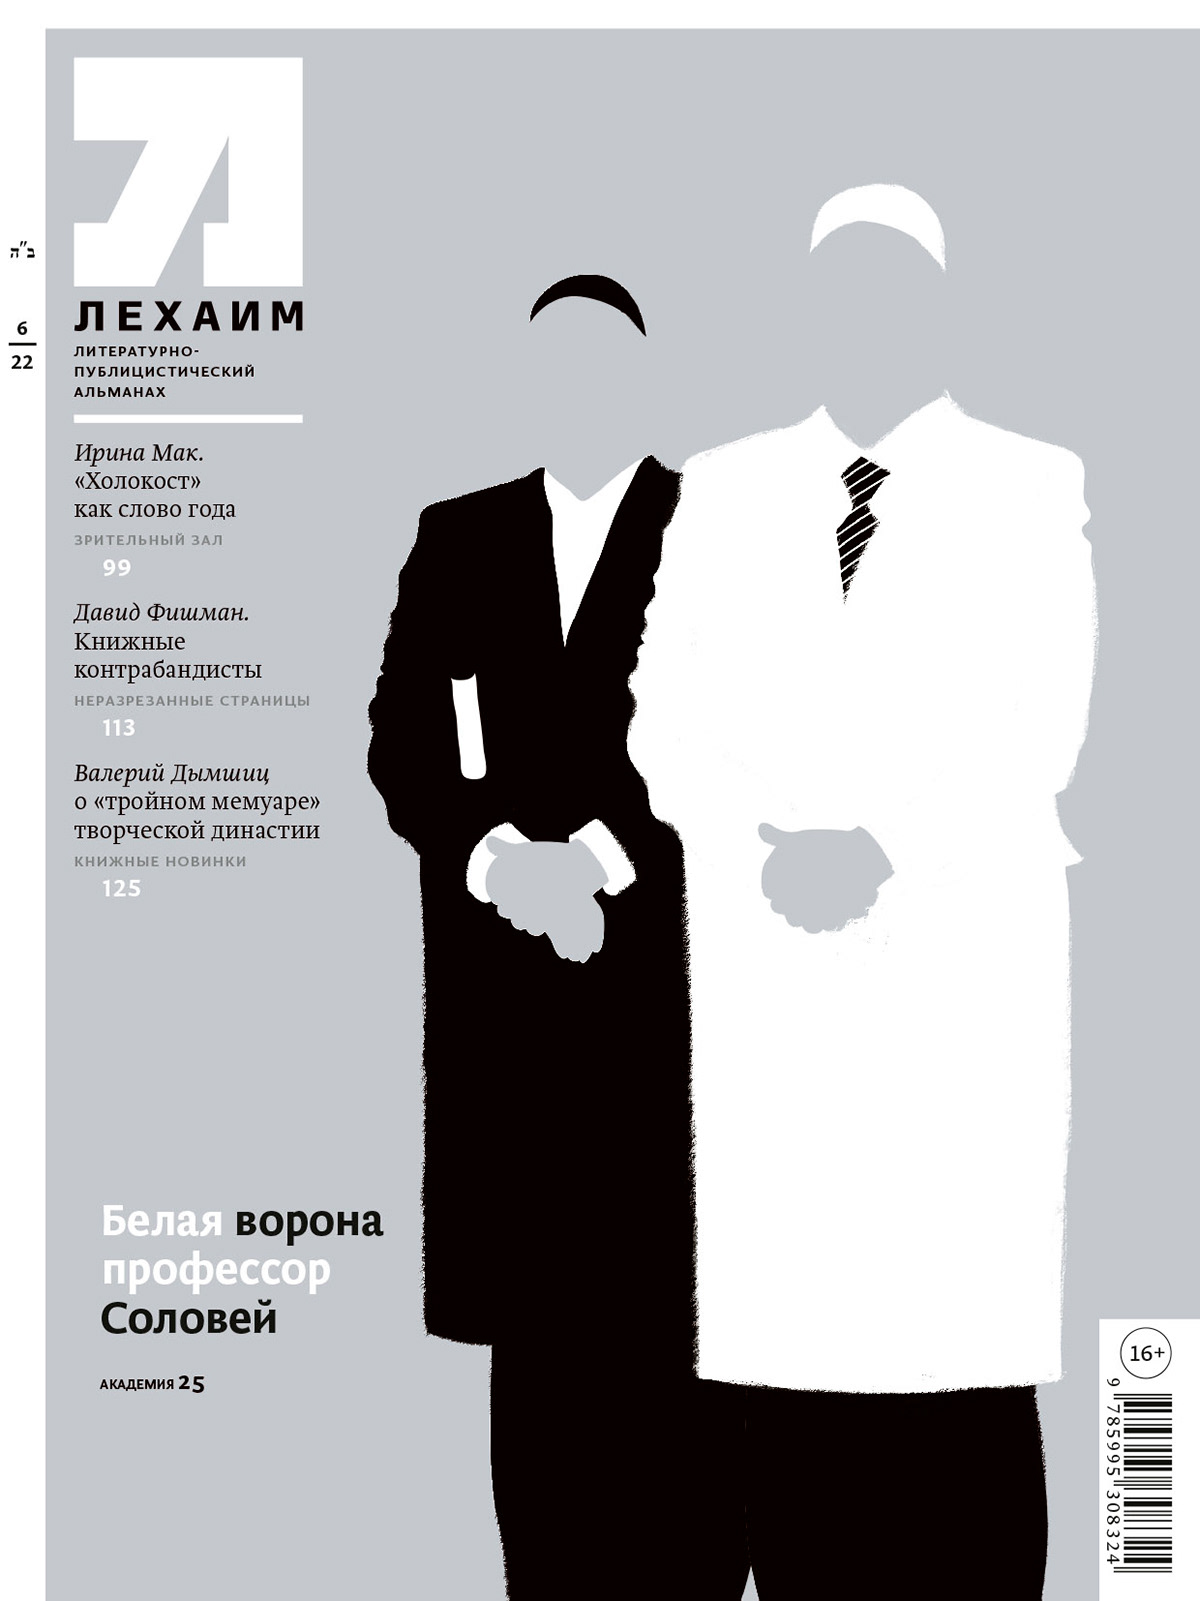 Cover Art cover design Editorial Illustration jewish Magazine Cover Magazine illustration portrait